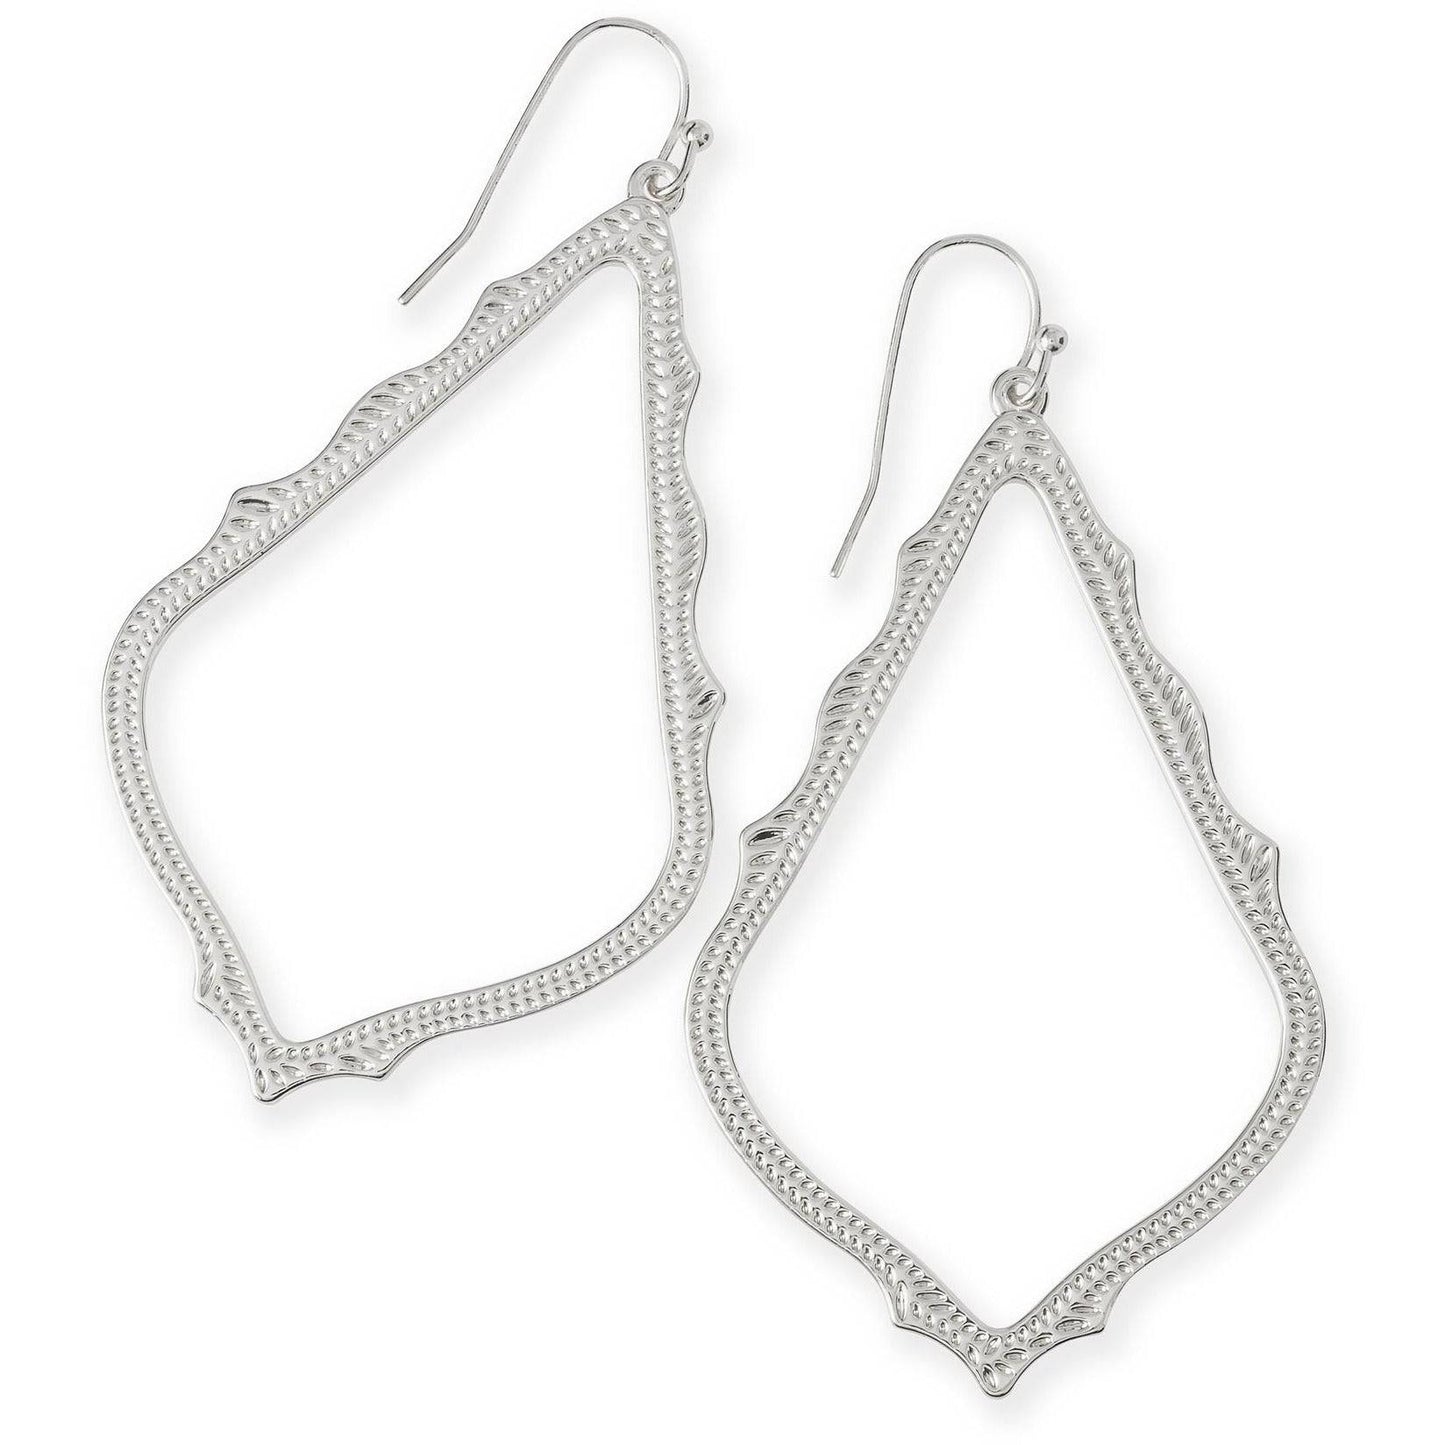 Kendra Scott - Sophee Drop Earrings in Silver - Findlay Rowe Designs